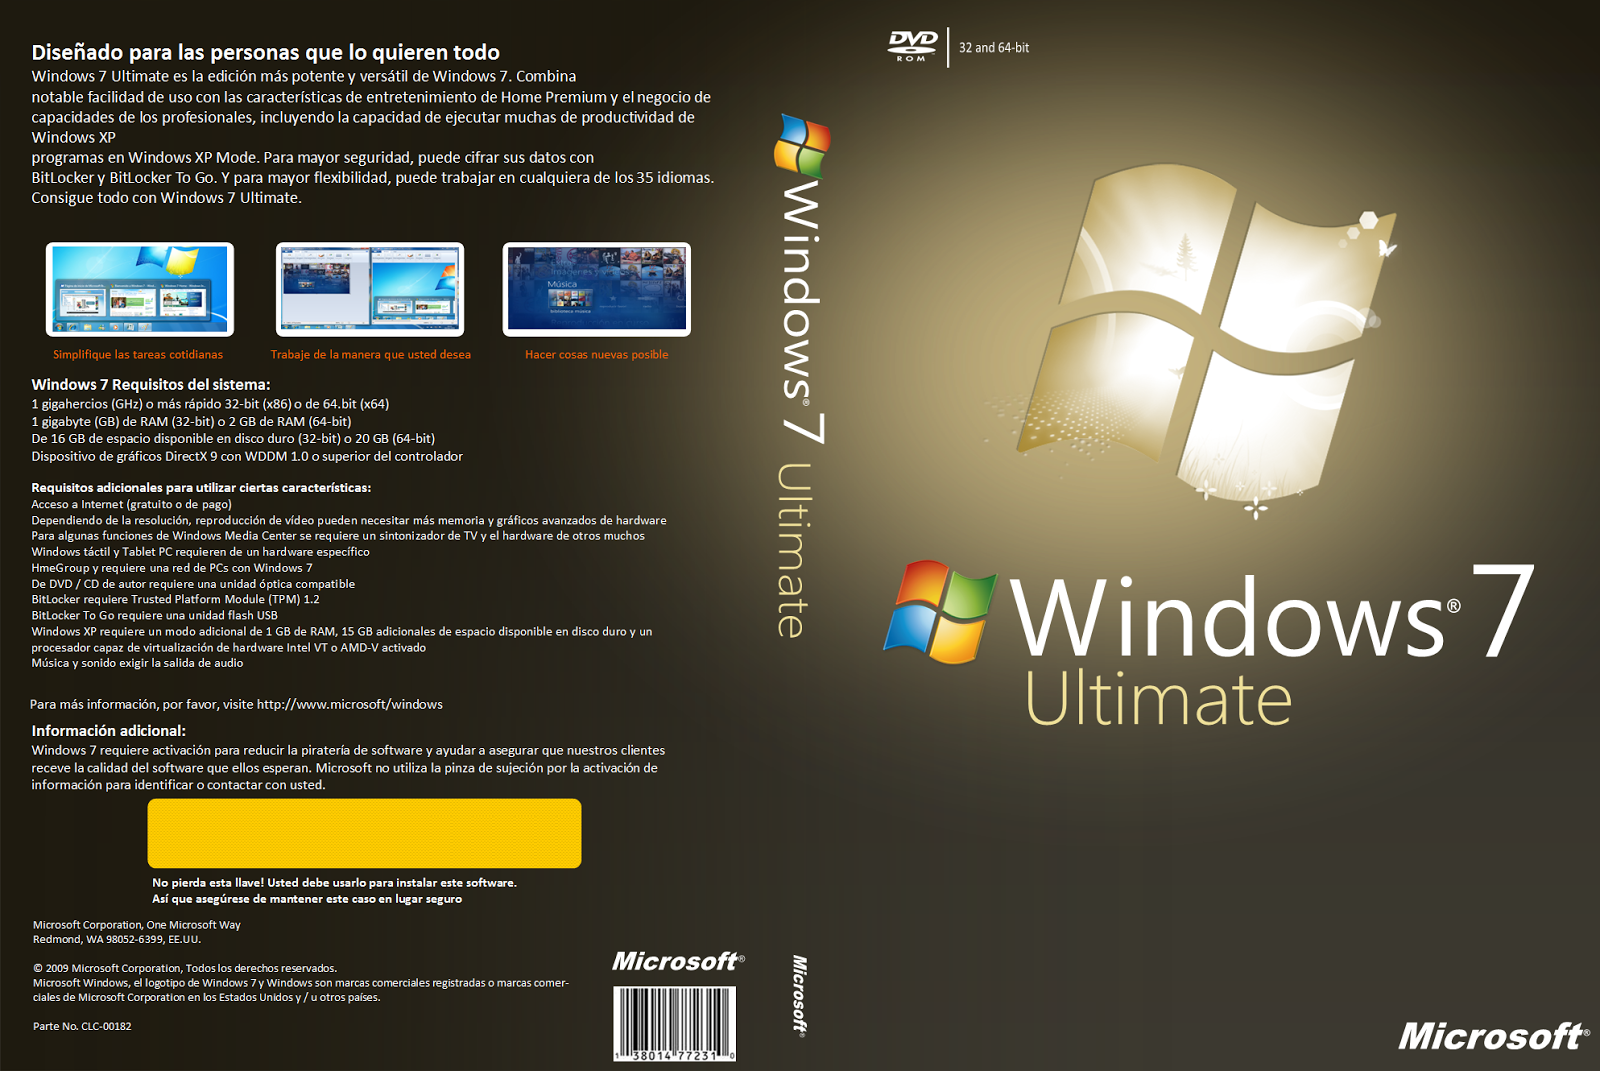 windows 7 ultimate 32 bit download